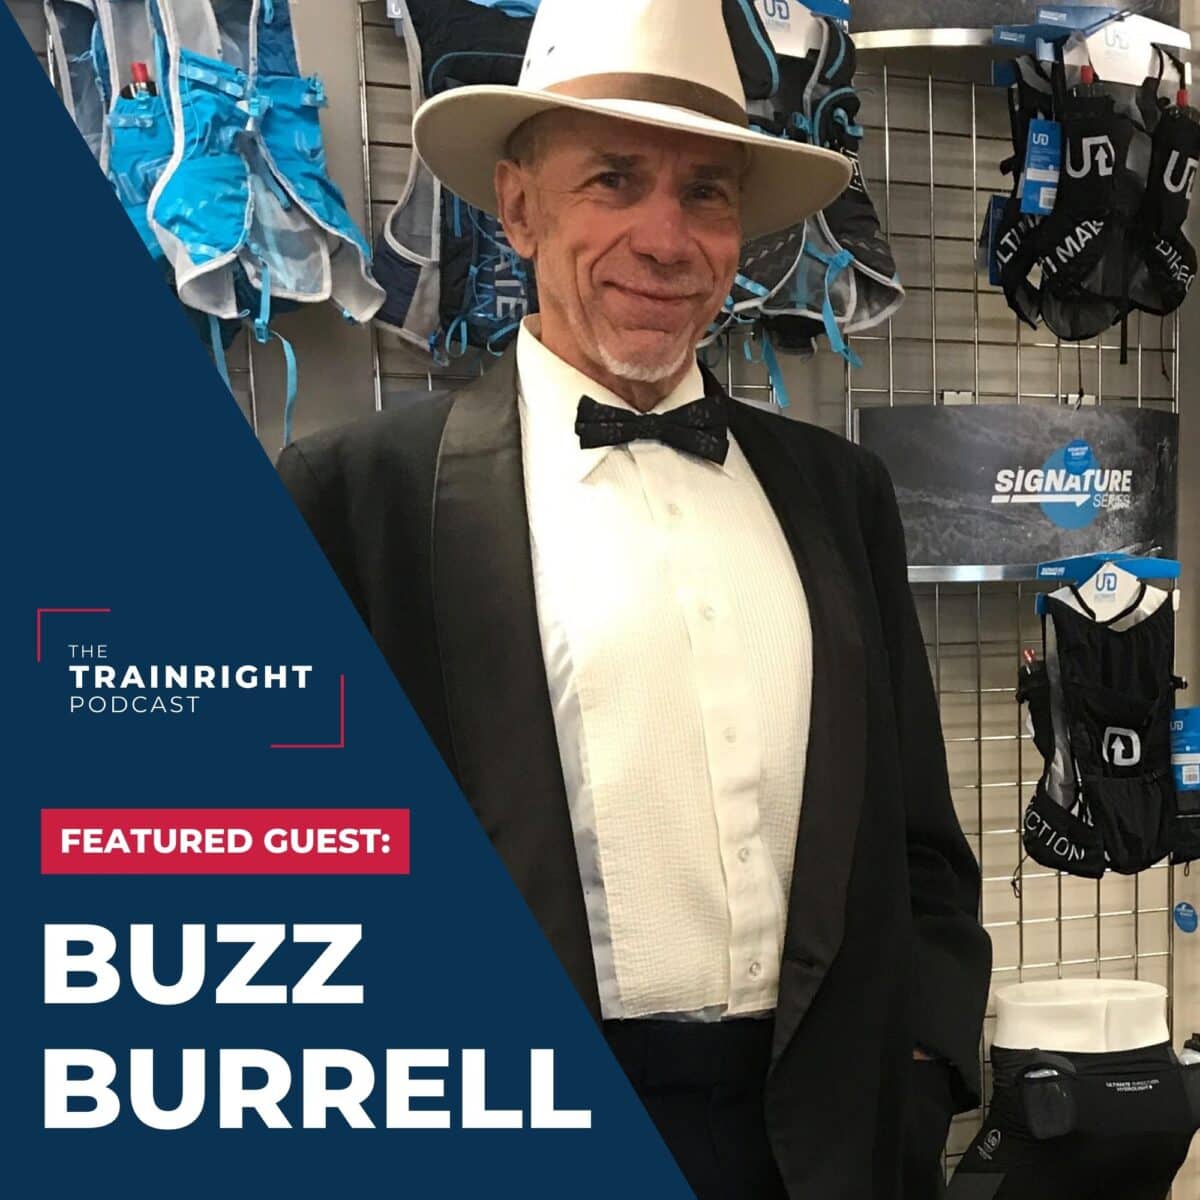 Buzz Burrell FKT podcast